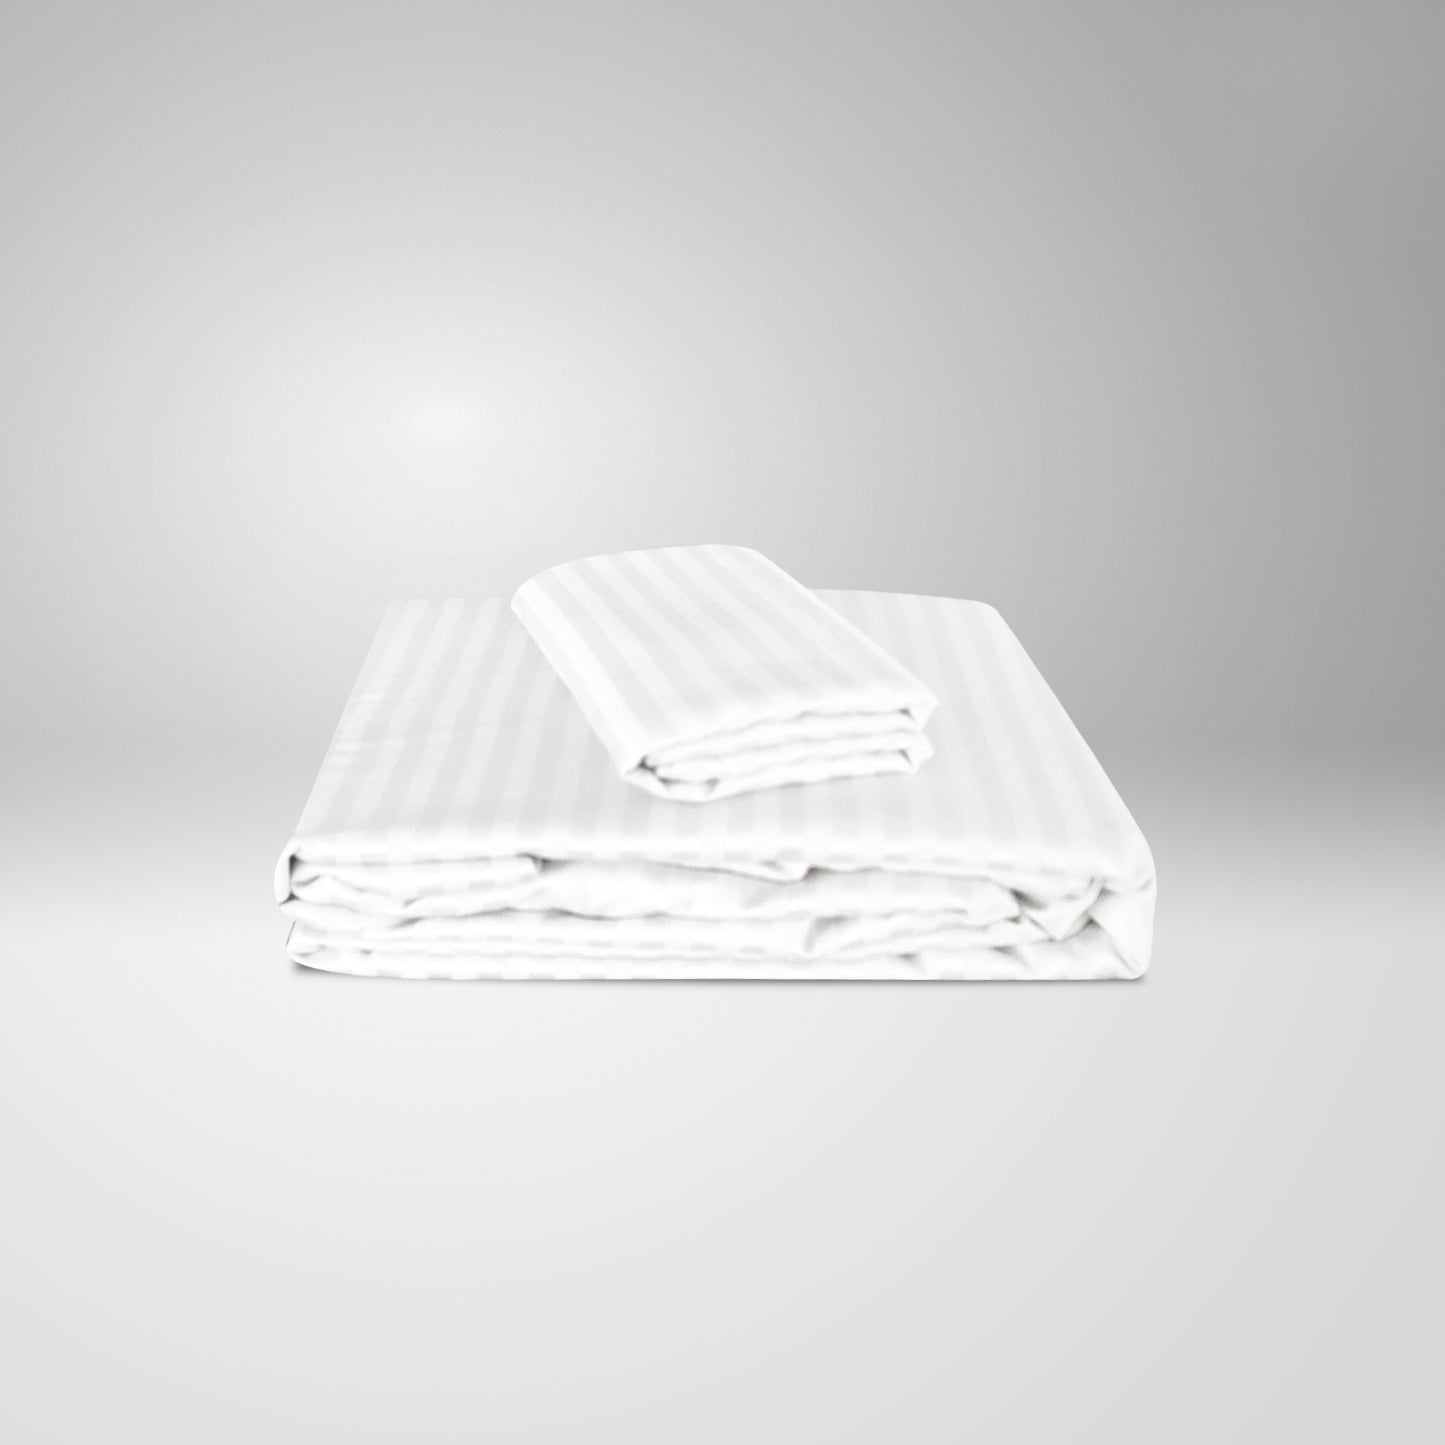 Stripe Bed sheet